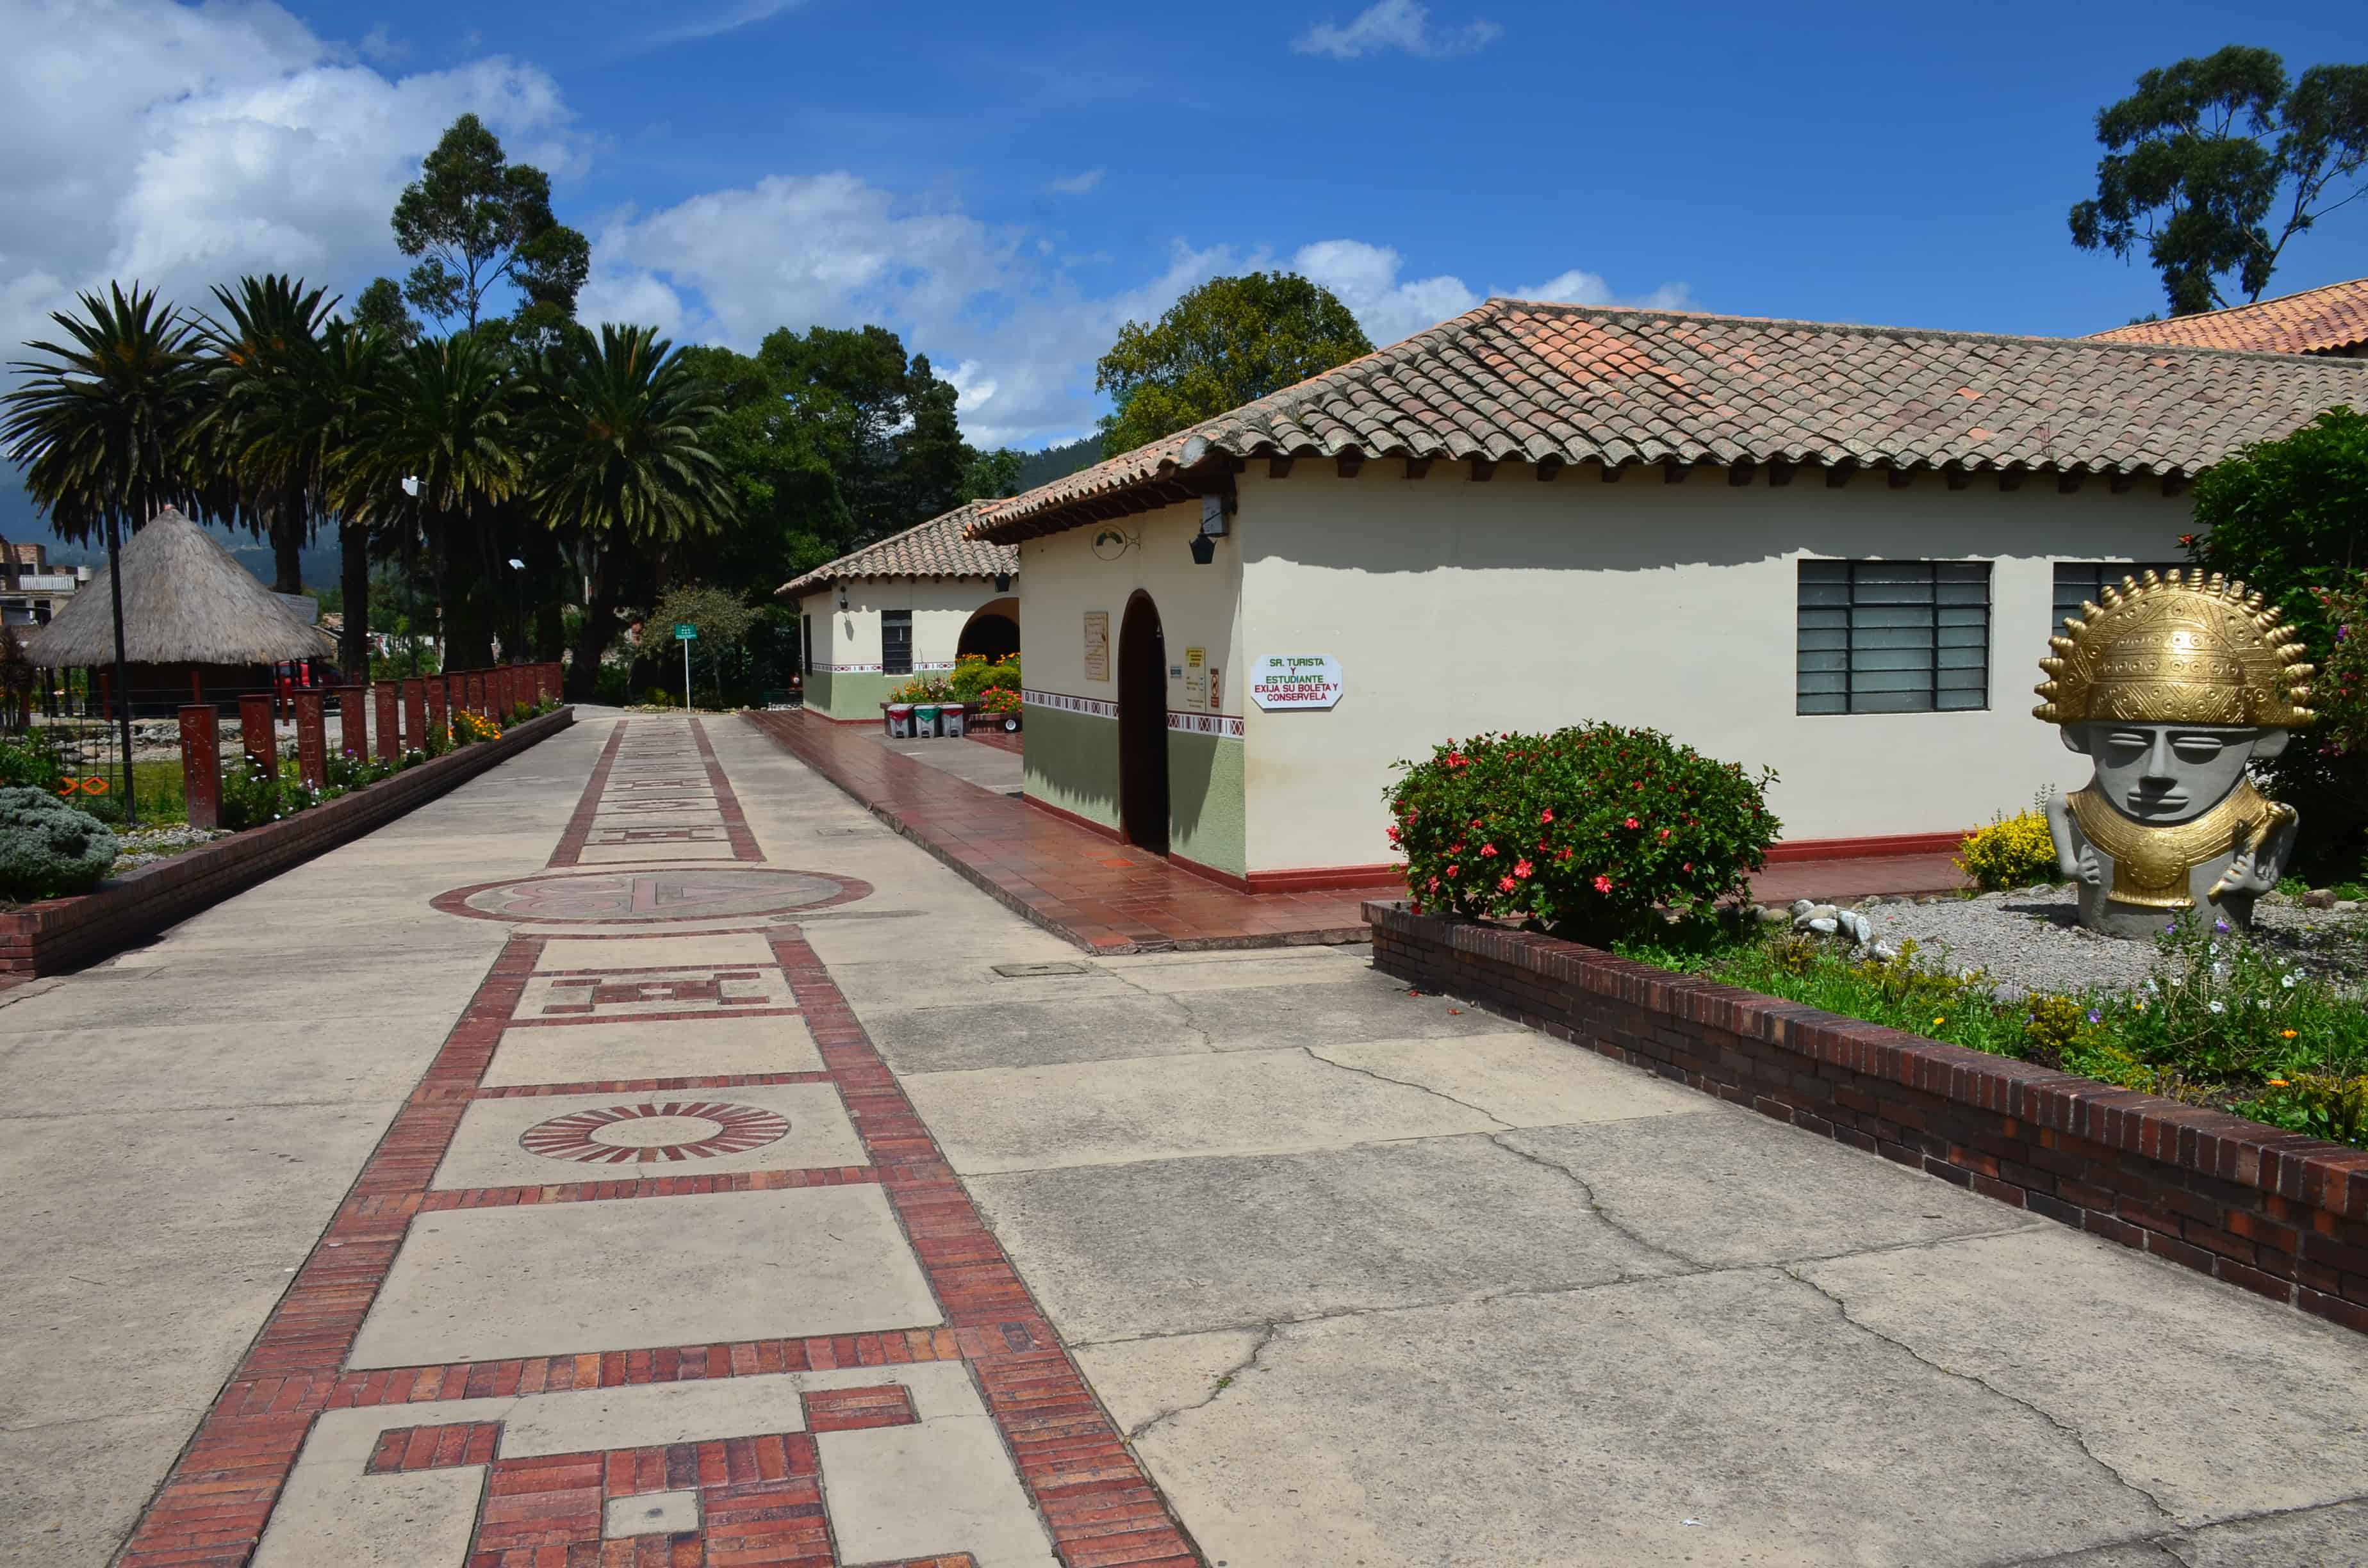 Suamox Archaeological Museum in Sogamoso, Boyacá, Colombia